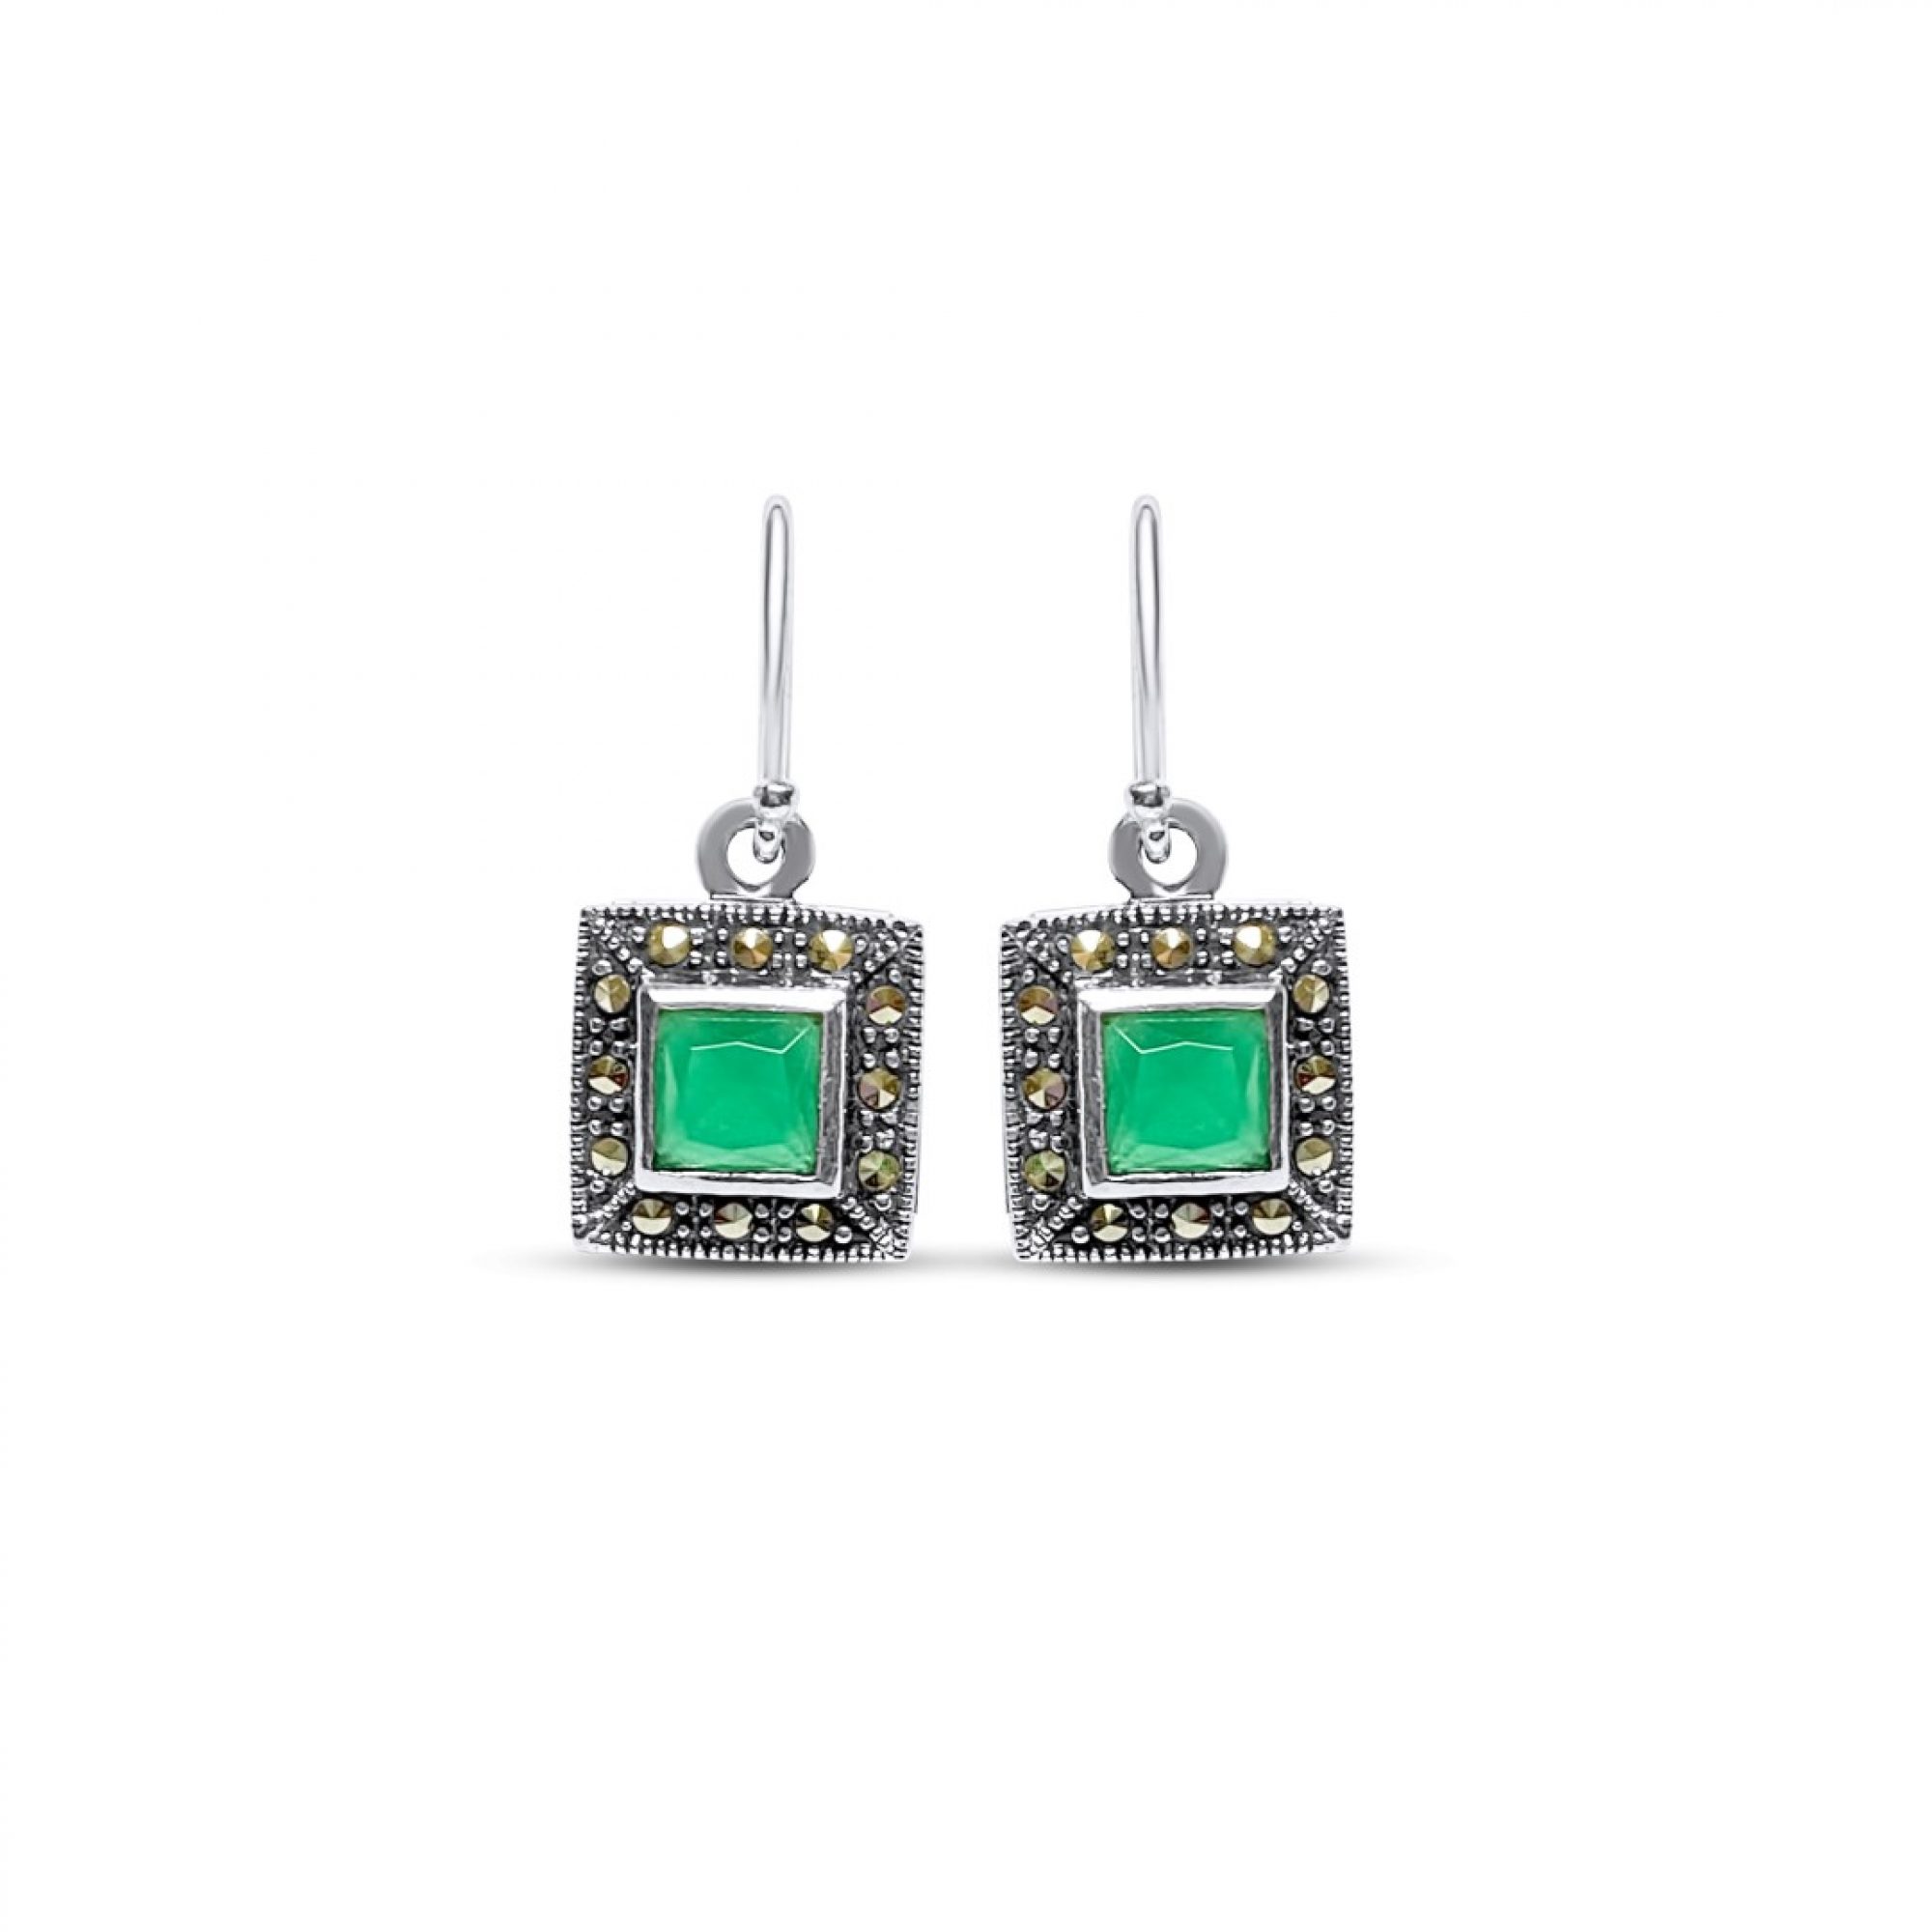 Dangle marcasite earrings with emerald stones